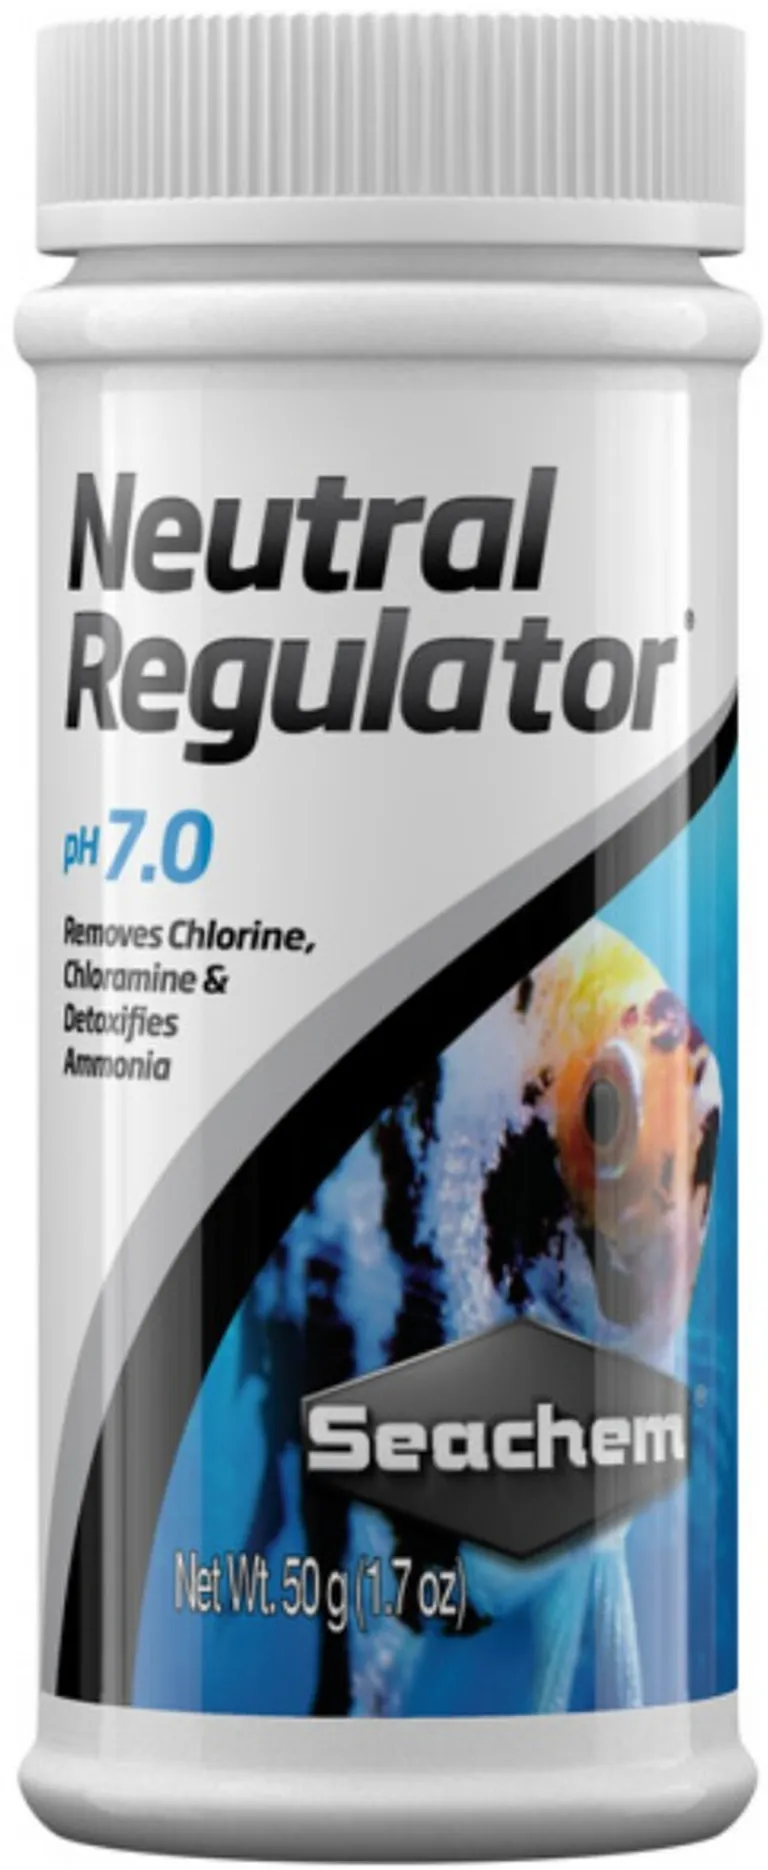 Seachem Neutral Regulator Adjusts pH to 7.0 for Aquariums Photo 1